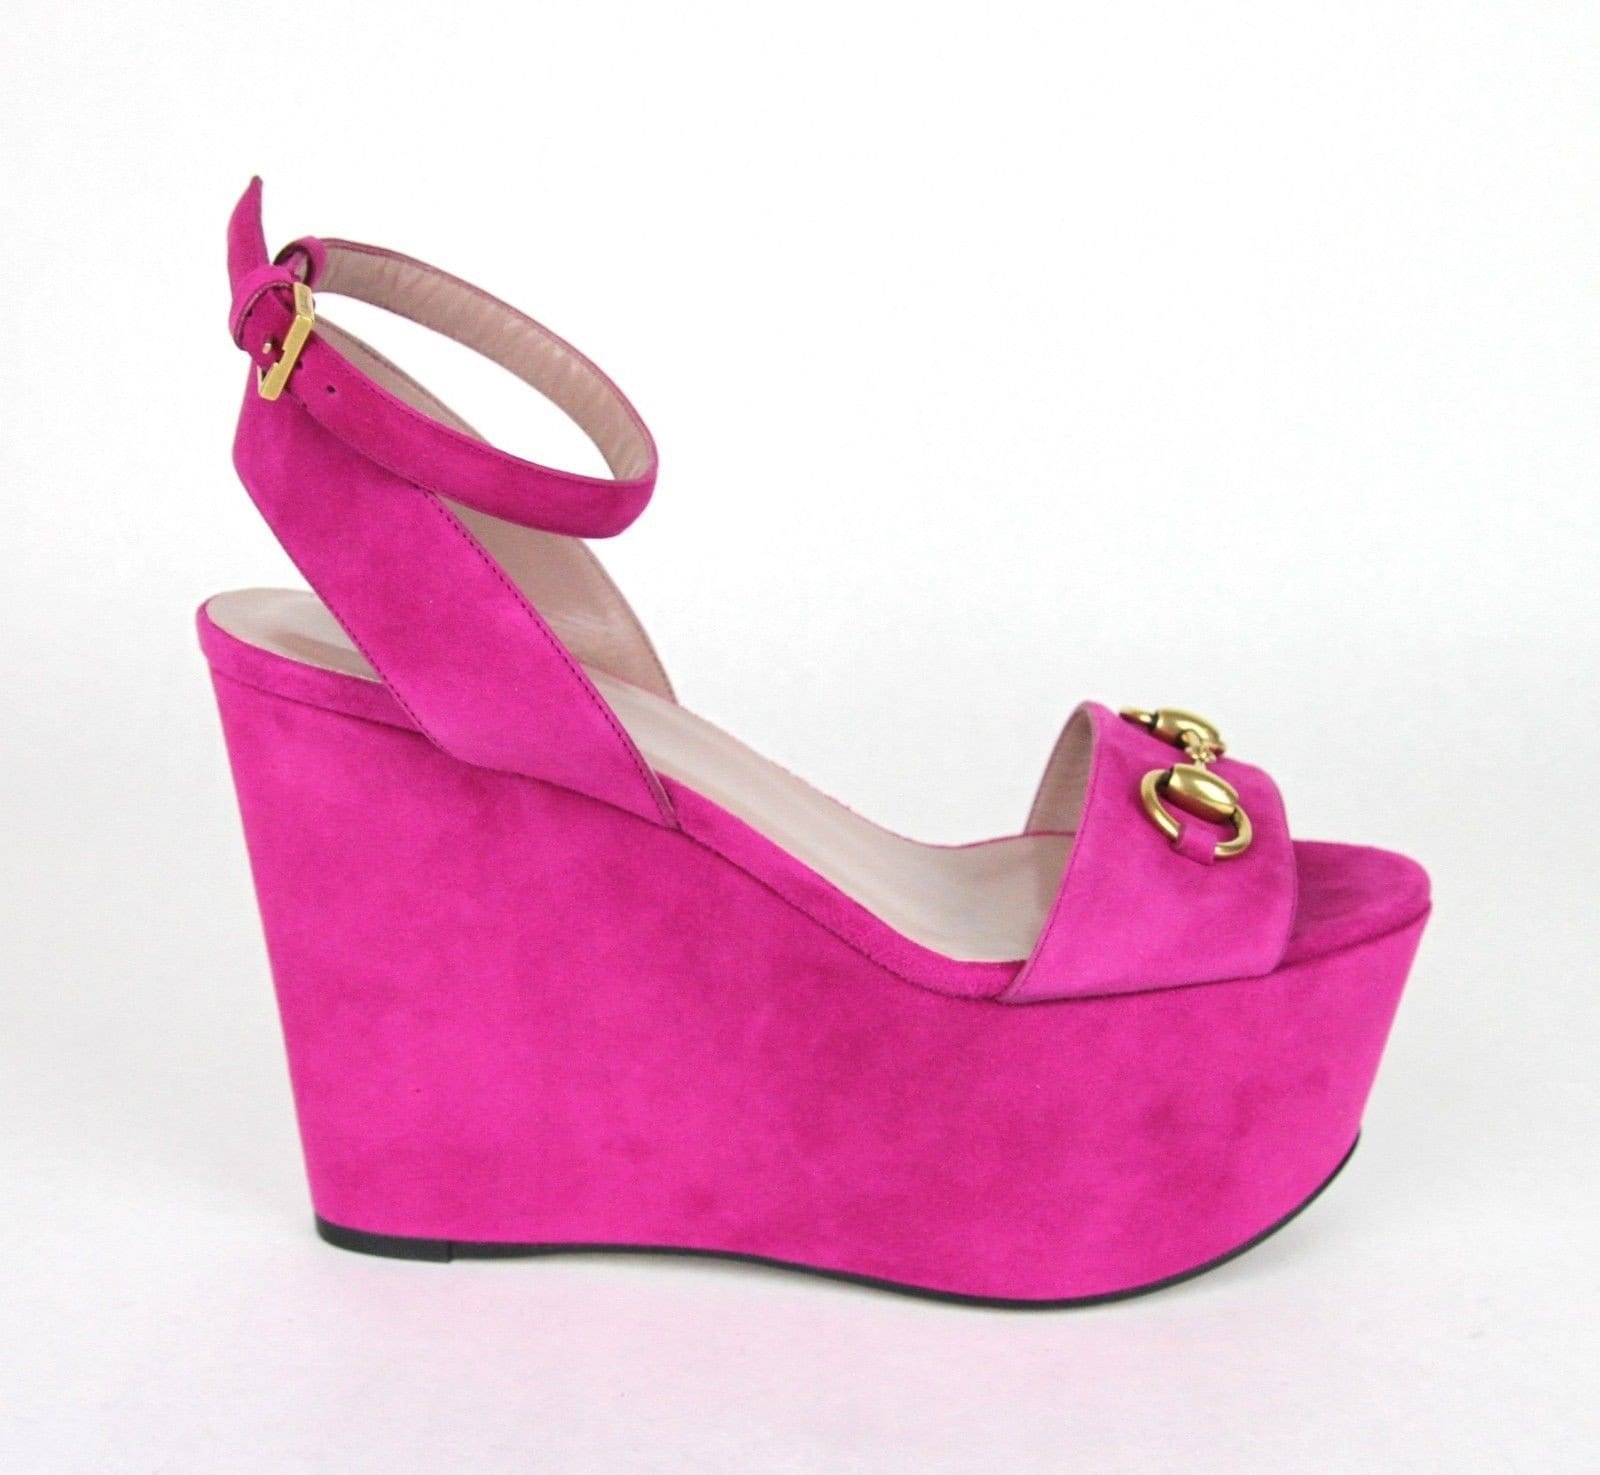 Gucci Horsebit Flatform Sandal 'Light Pink' - 742435-JAAC9-6816